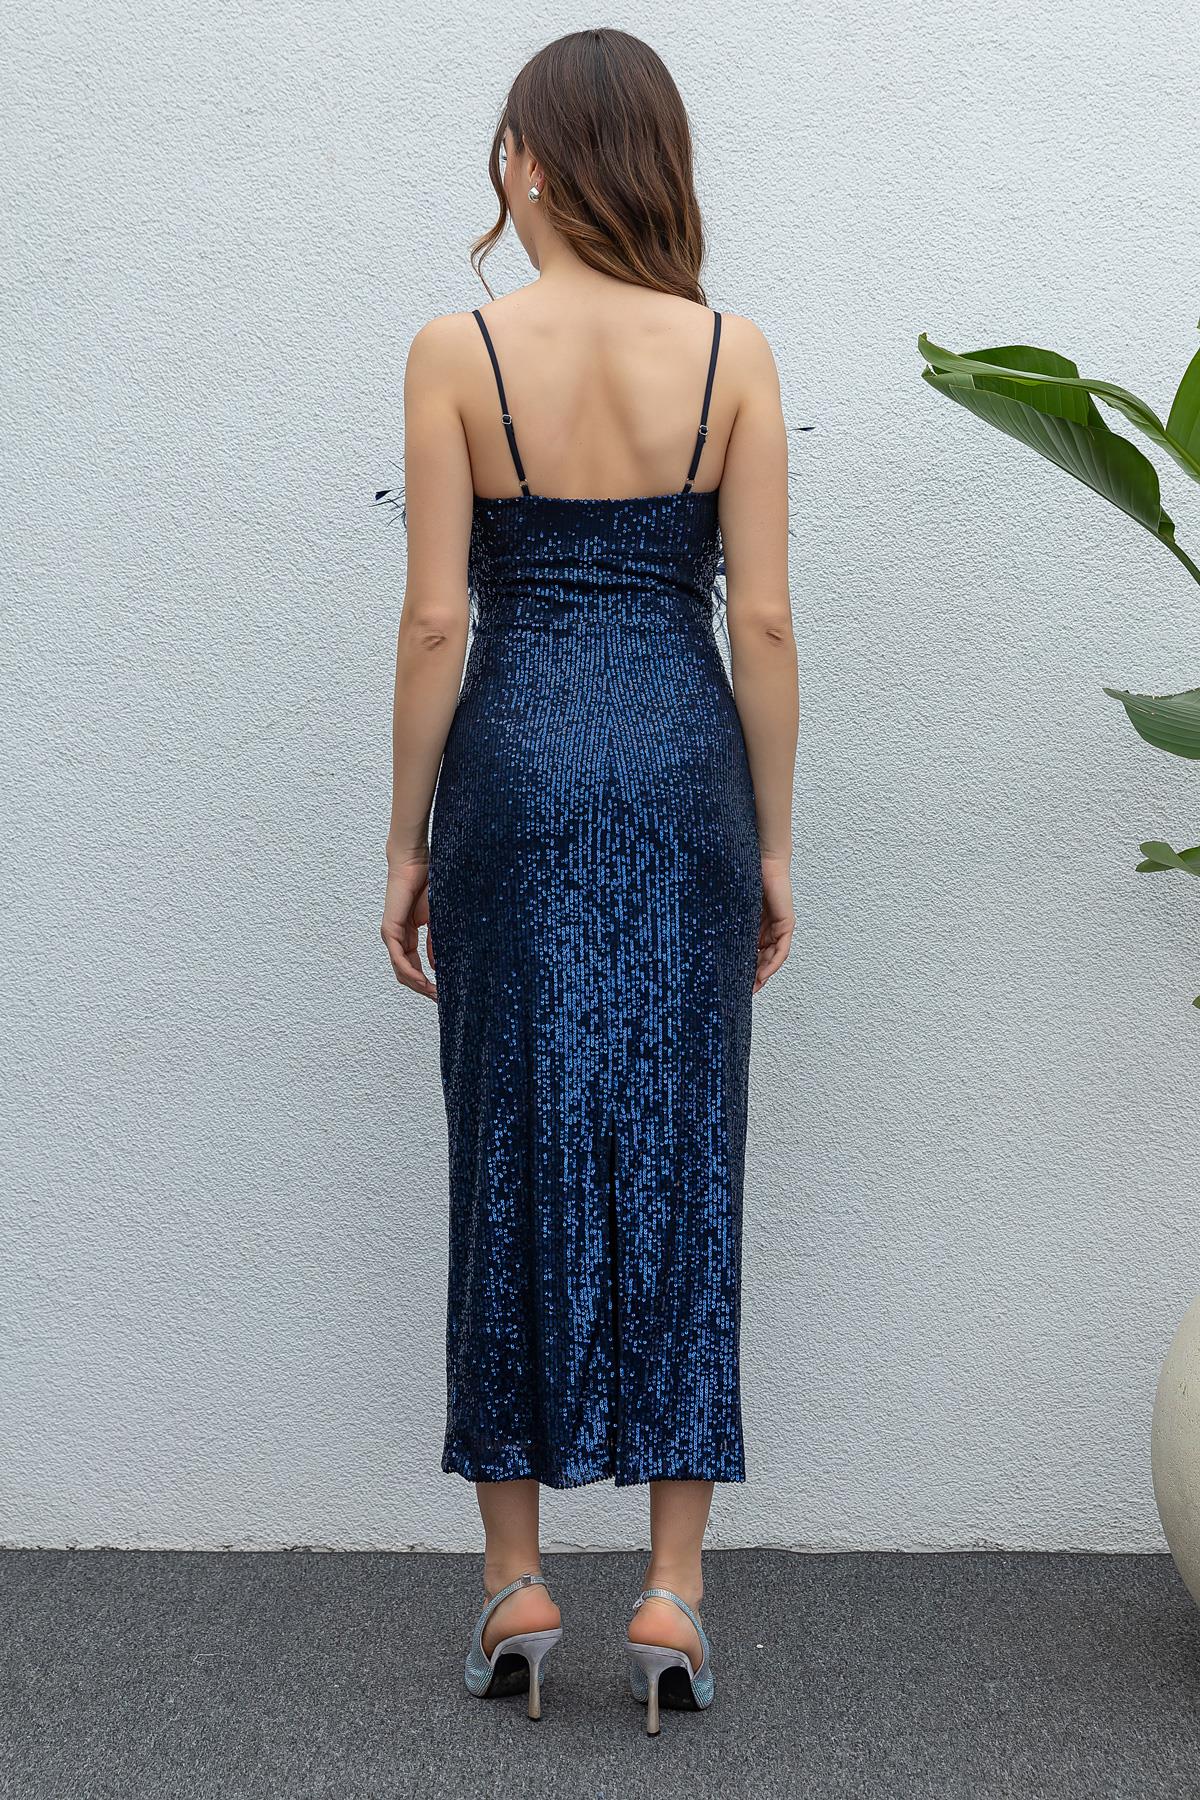 Otrisch Sequin Evening Dress - DARK BLUE - Lebbse